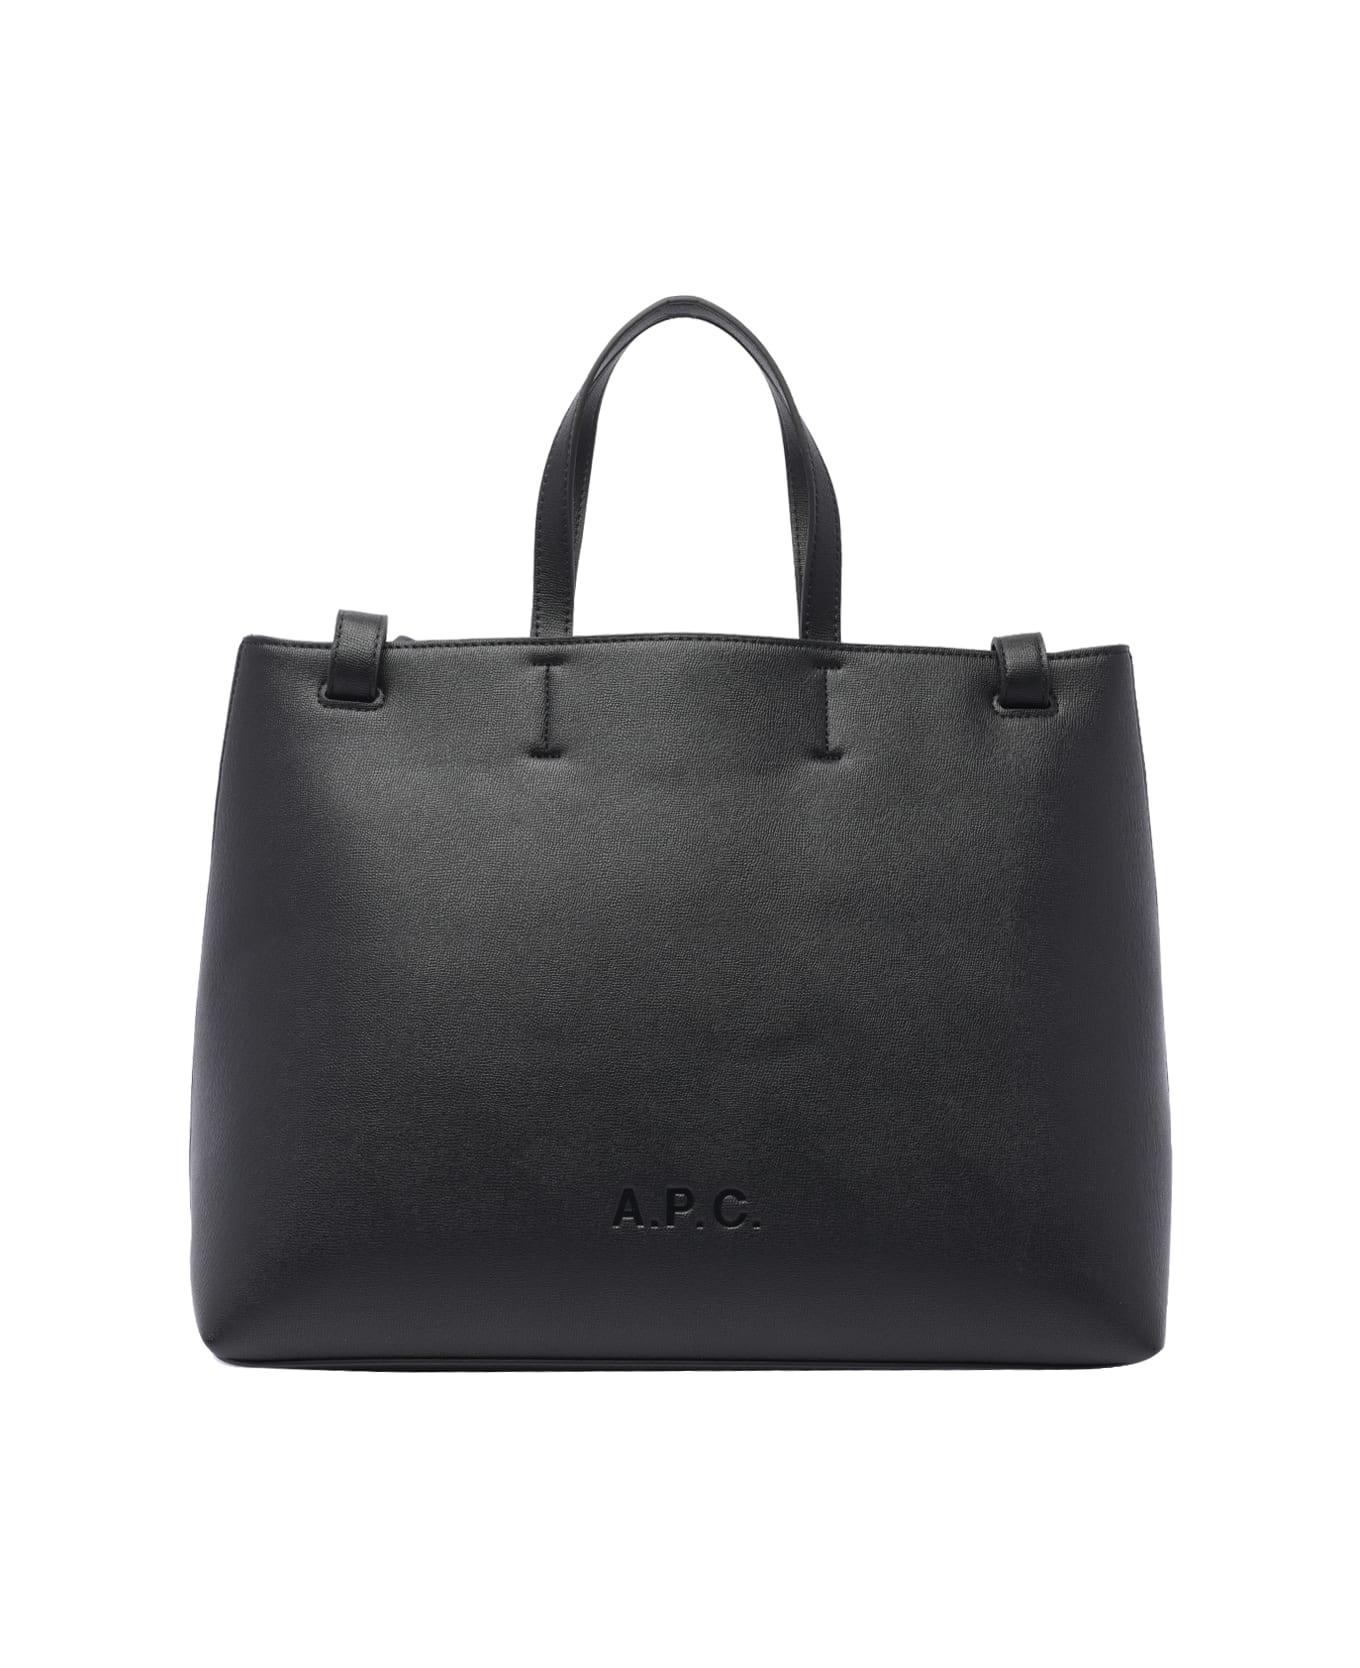 A.P.C. Market Shopping Bag - Black トートバッグ